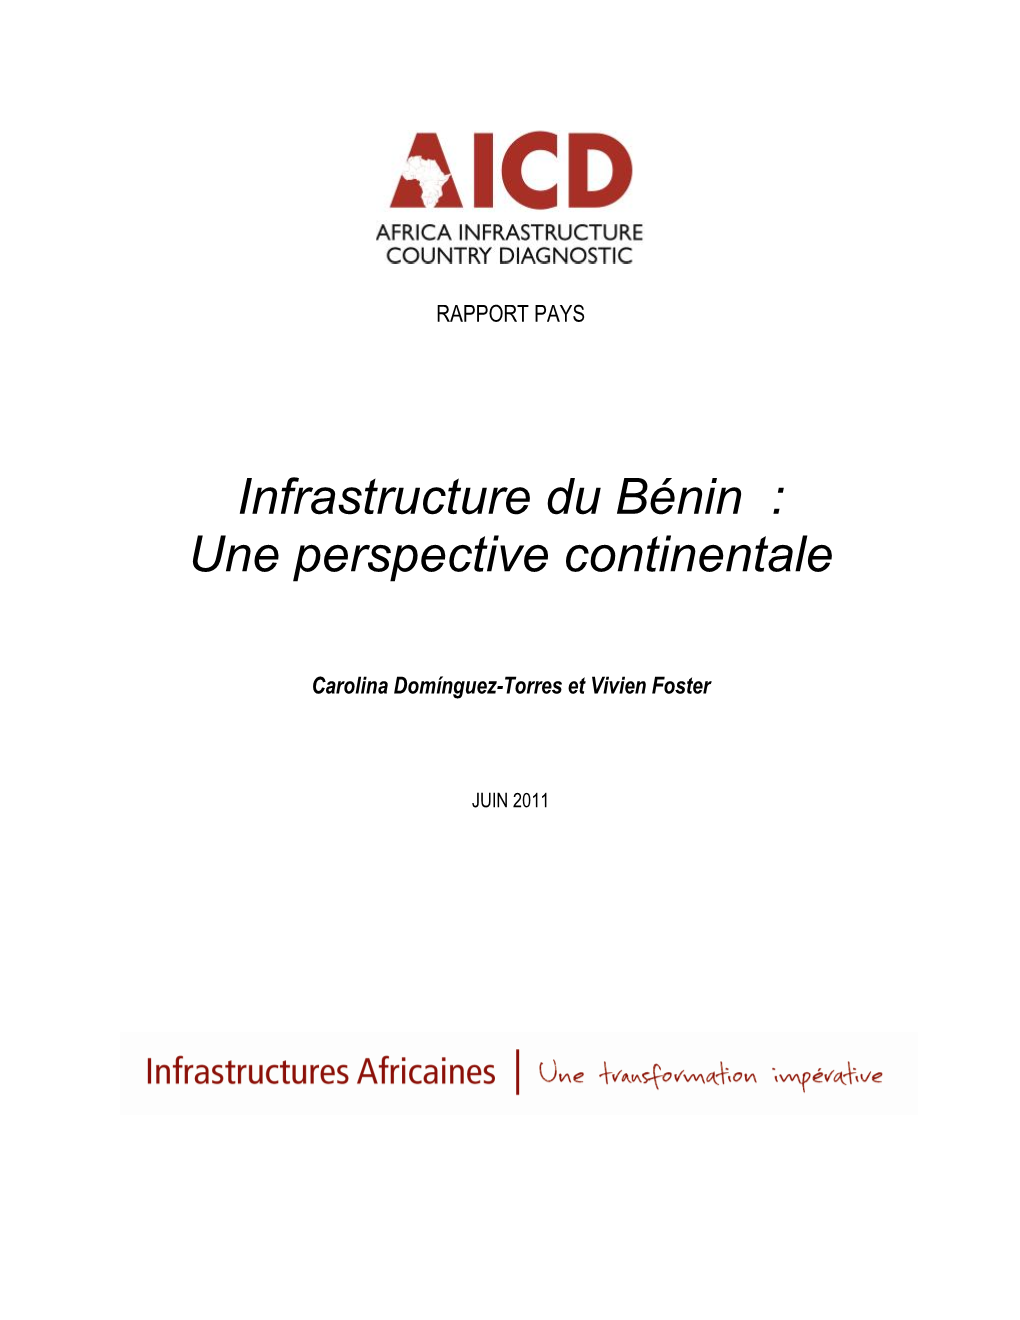 Infrastructure Du Bénin : Une Perspective Continentale